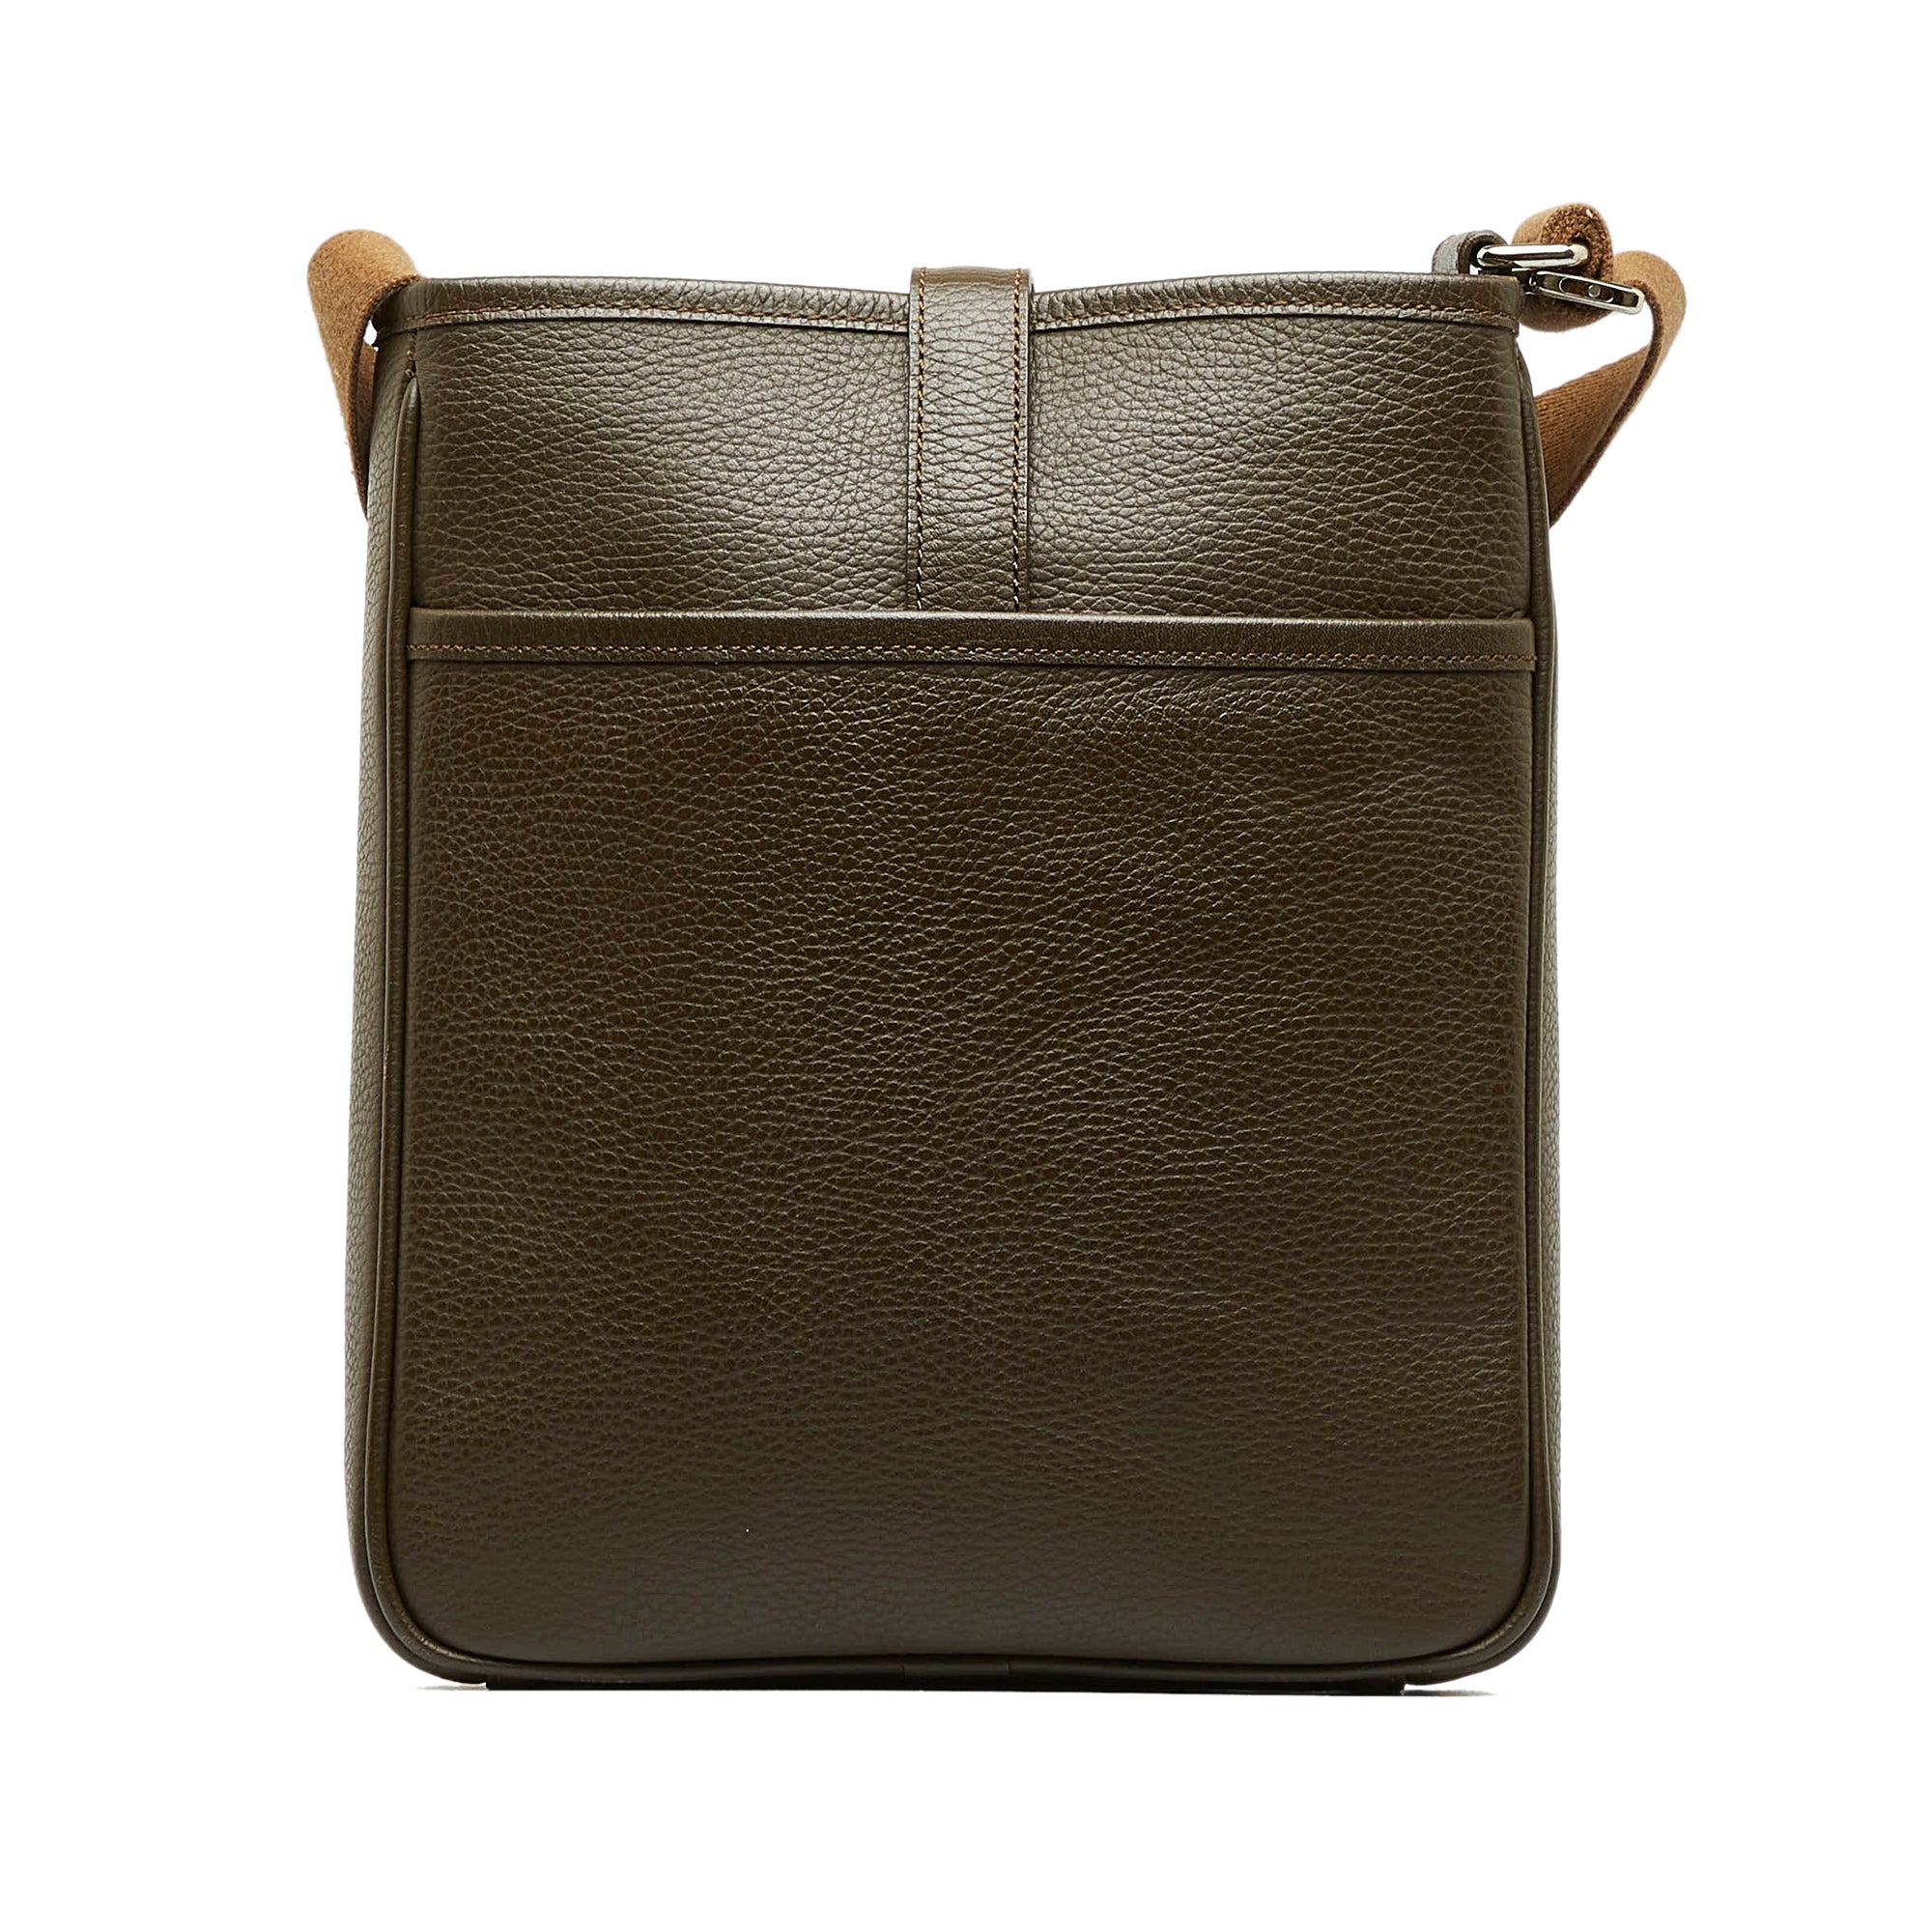 Louis Vuitton - Authenticated Handbag - Suede Beige Plain for Women, Very Good Condition